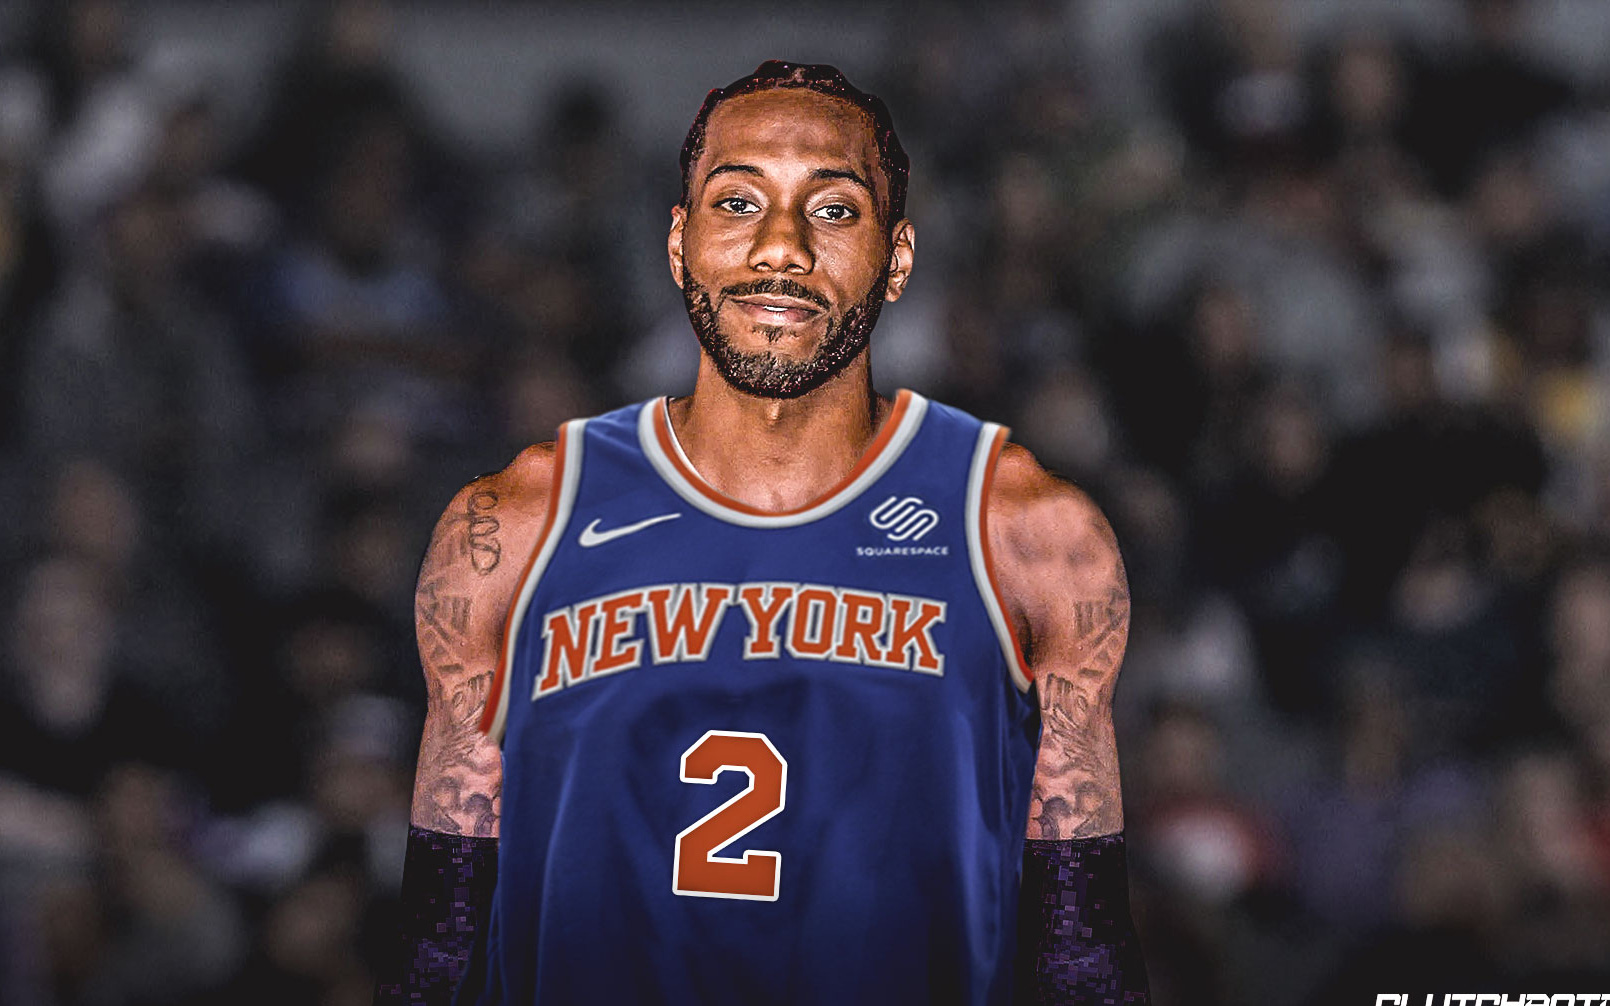 Rộ tin đồn Kawhi Leonard cập bến New York Knicks nếu Los Angeles Clippers sớm bị loại khỏi Playoffs 2021